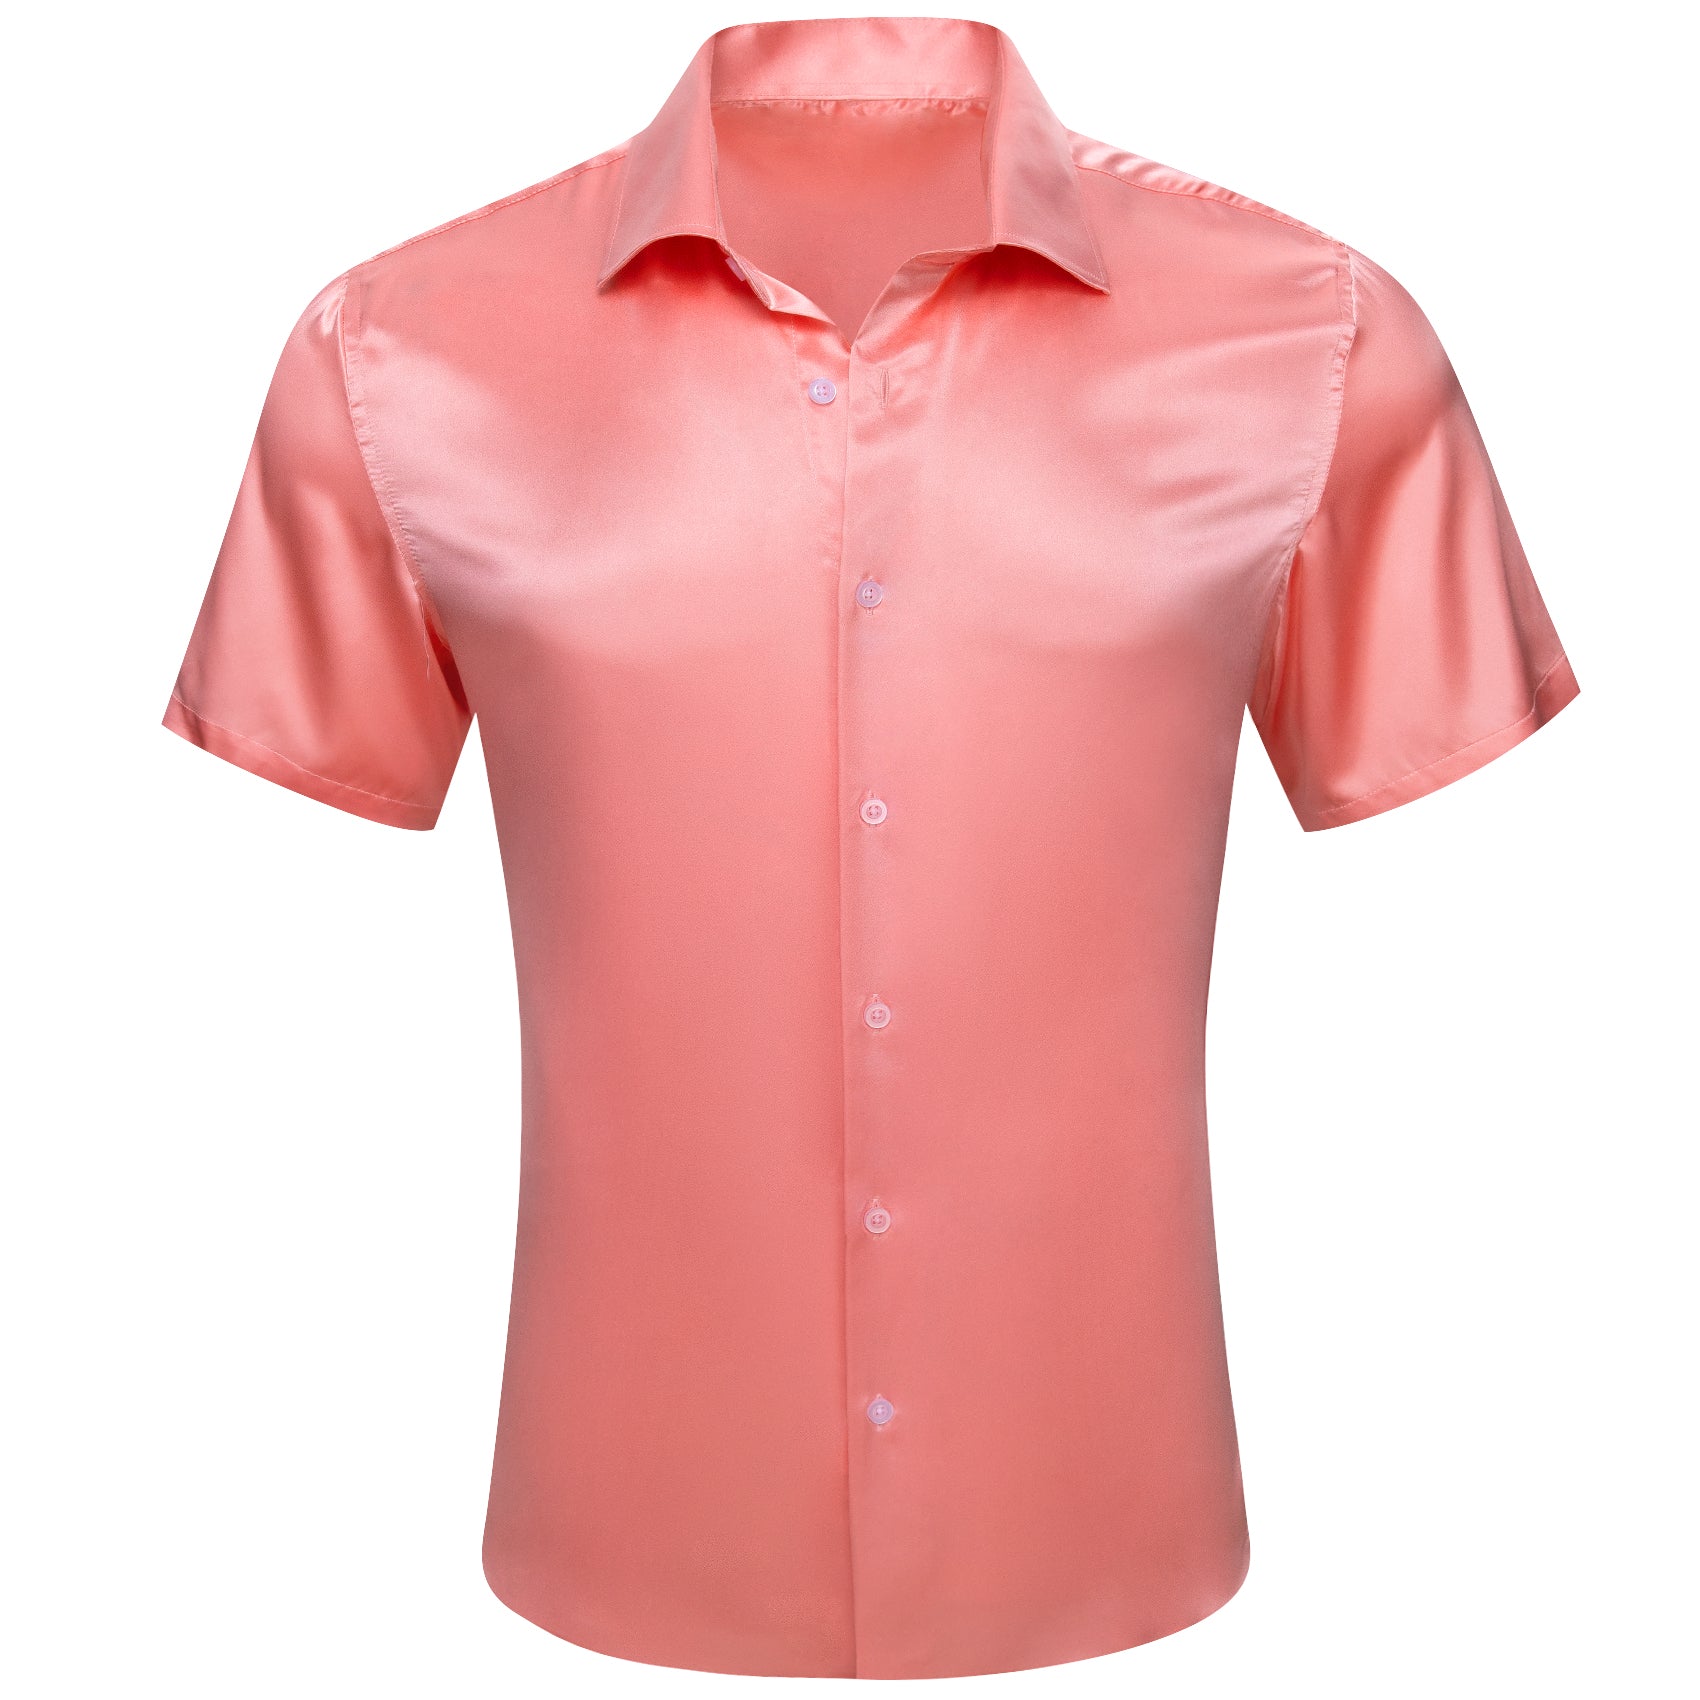 Barry.wang Button Down Shirt Light Coral Solid Short Sleeves Shirt